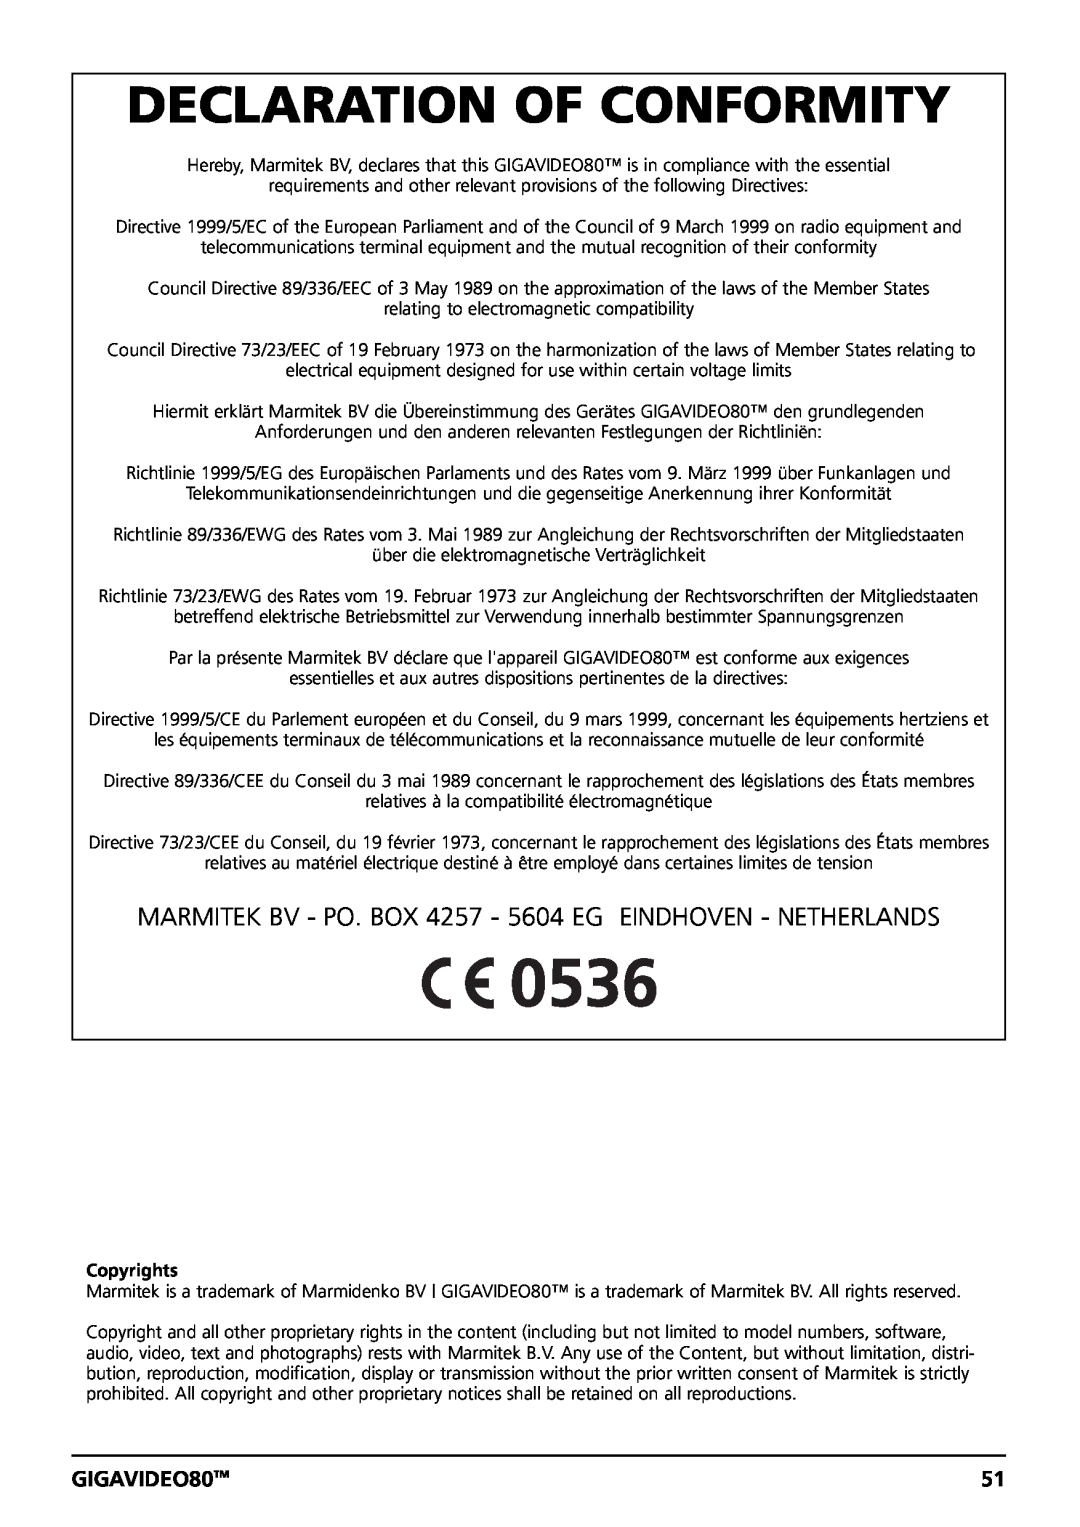 Marmitek GIGAVIDEO80 Declaration Of Conformity, MARMITEK BV - PO. BOX 4257 - 5604 EG EINDHOVEN - NETHERLANDS, Copyrights 